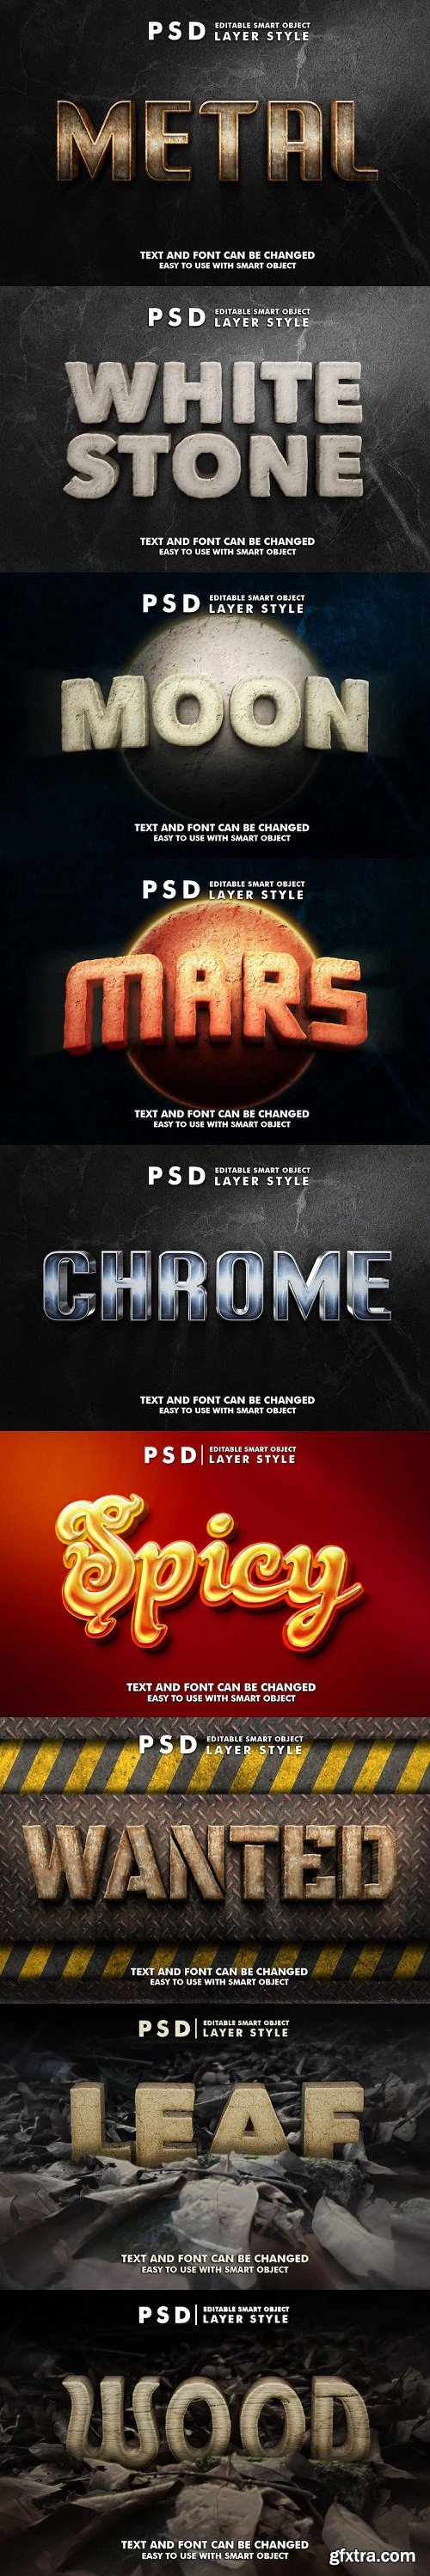 PSD Editable Text Effects